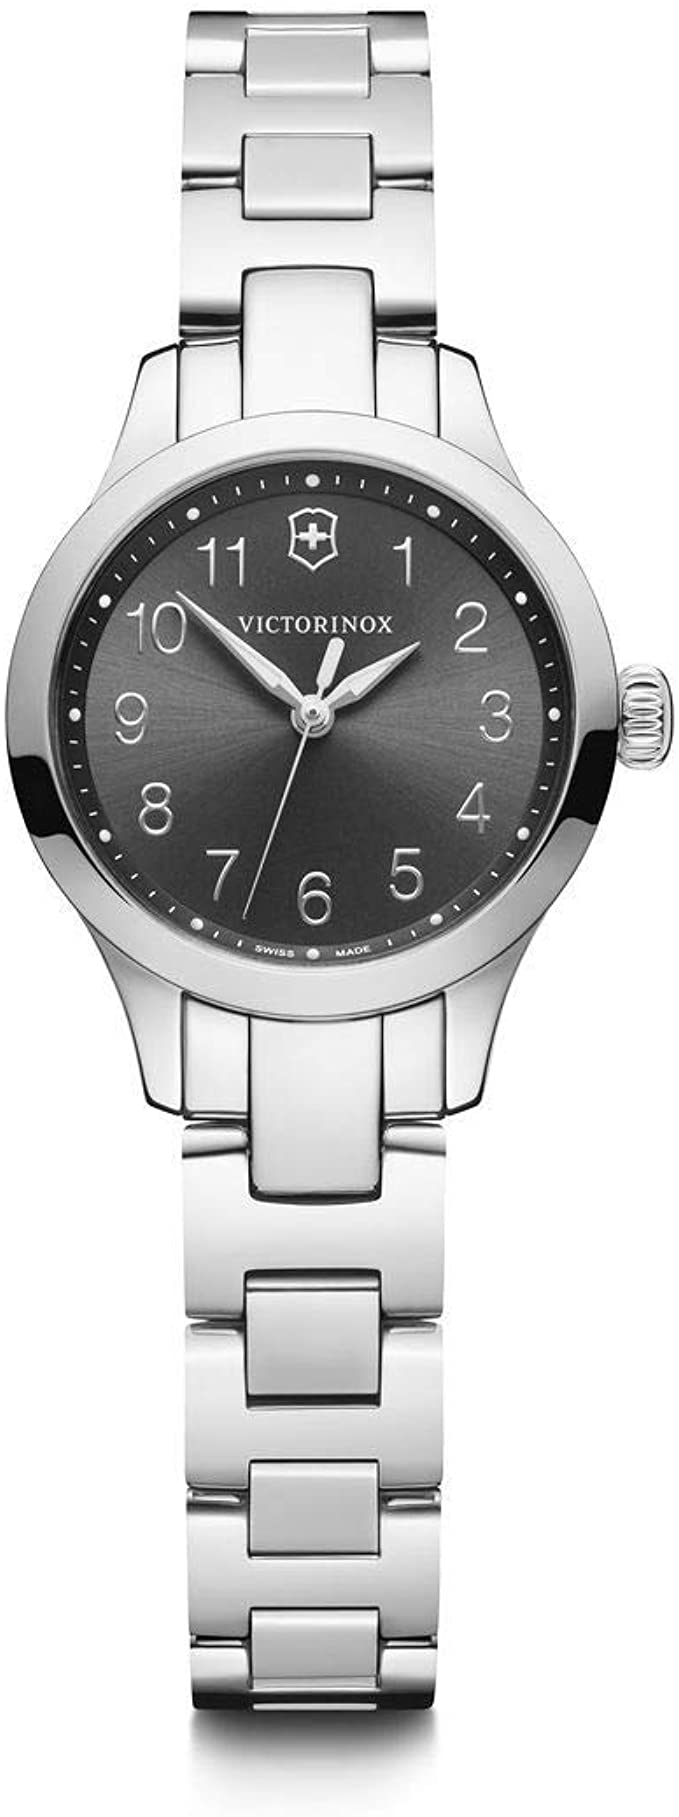 Victorinox Alliance XS, Black dial, Stainless Steel Bracelet